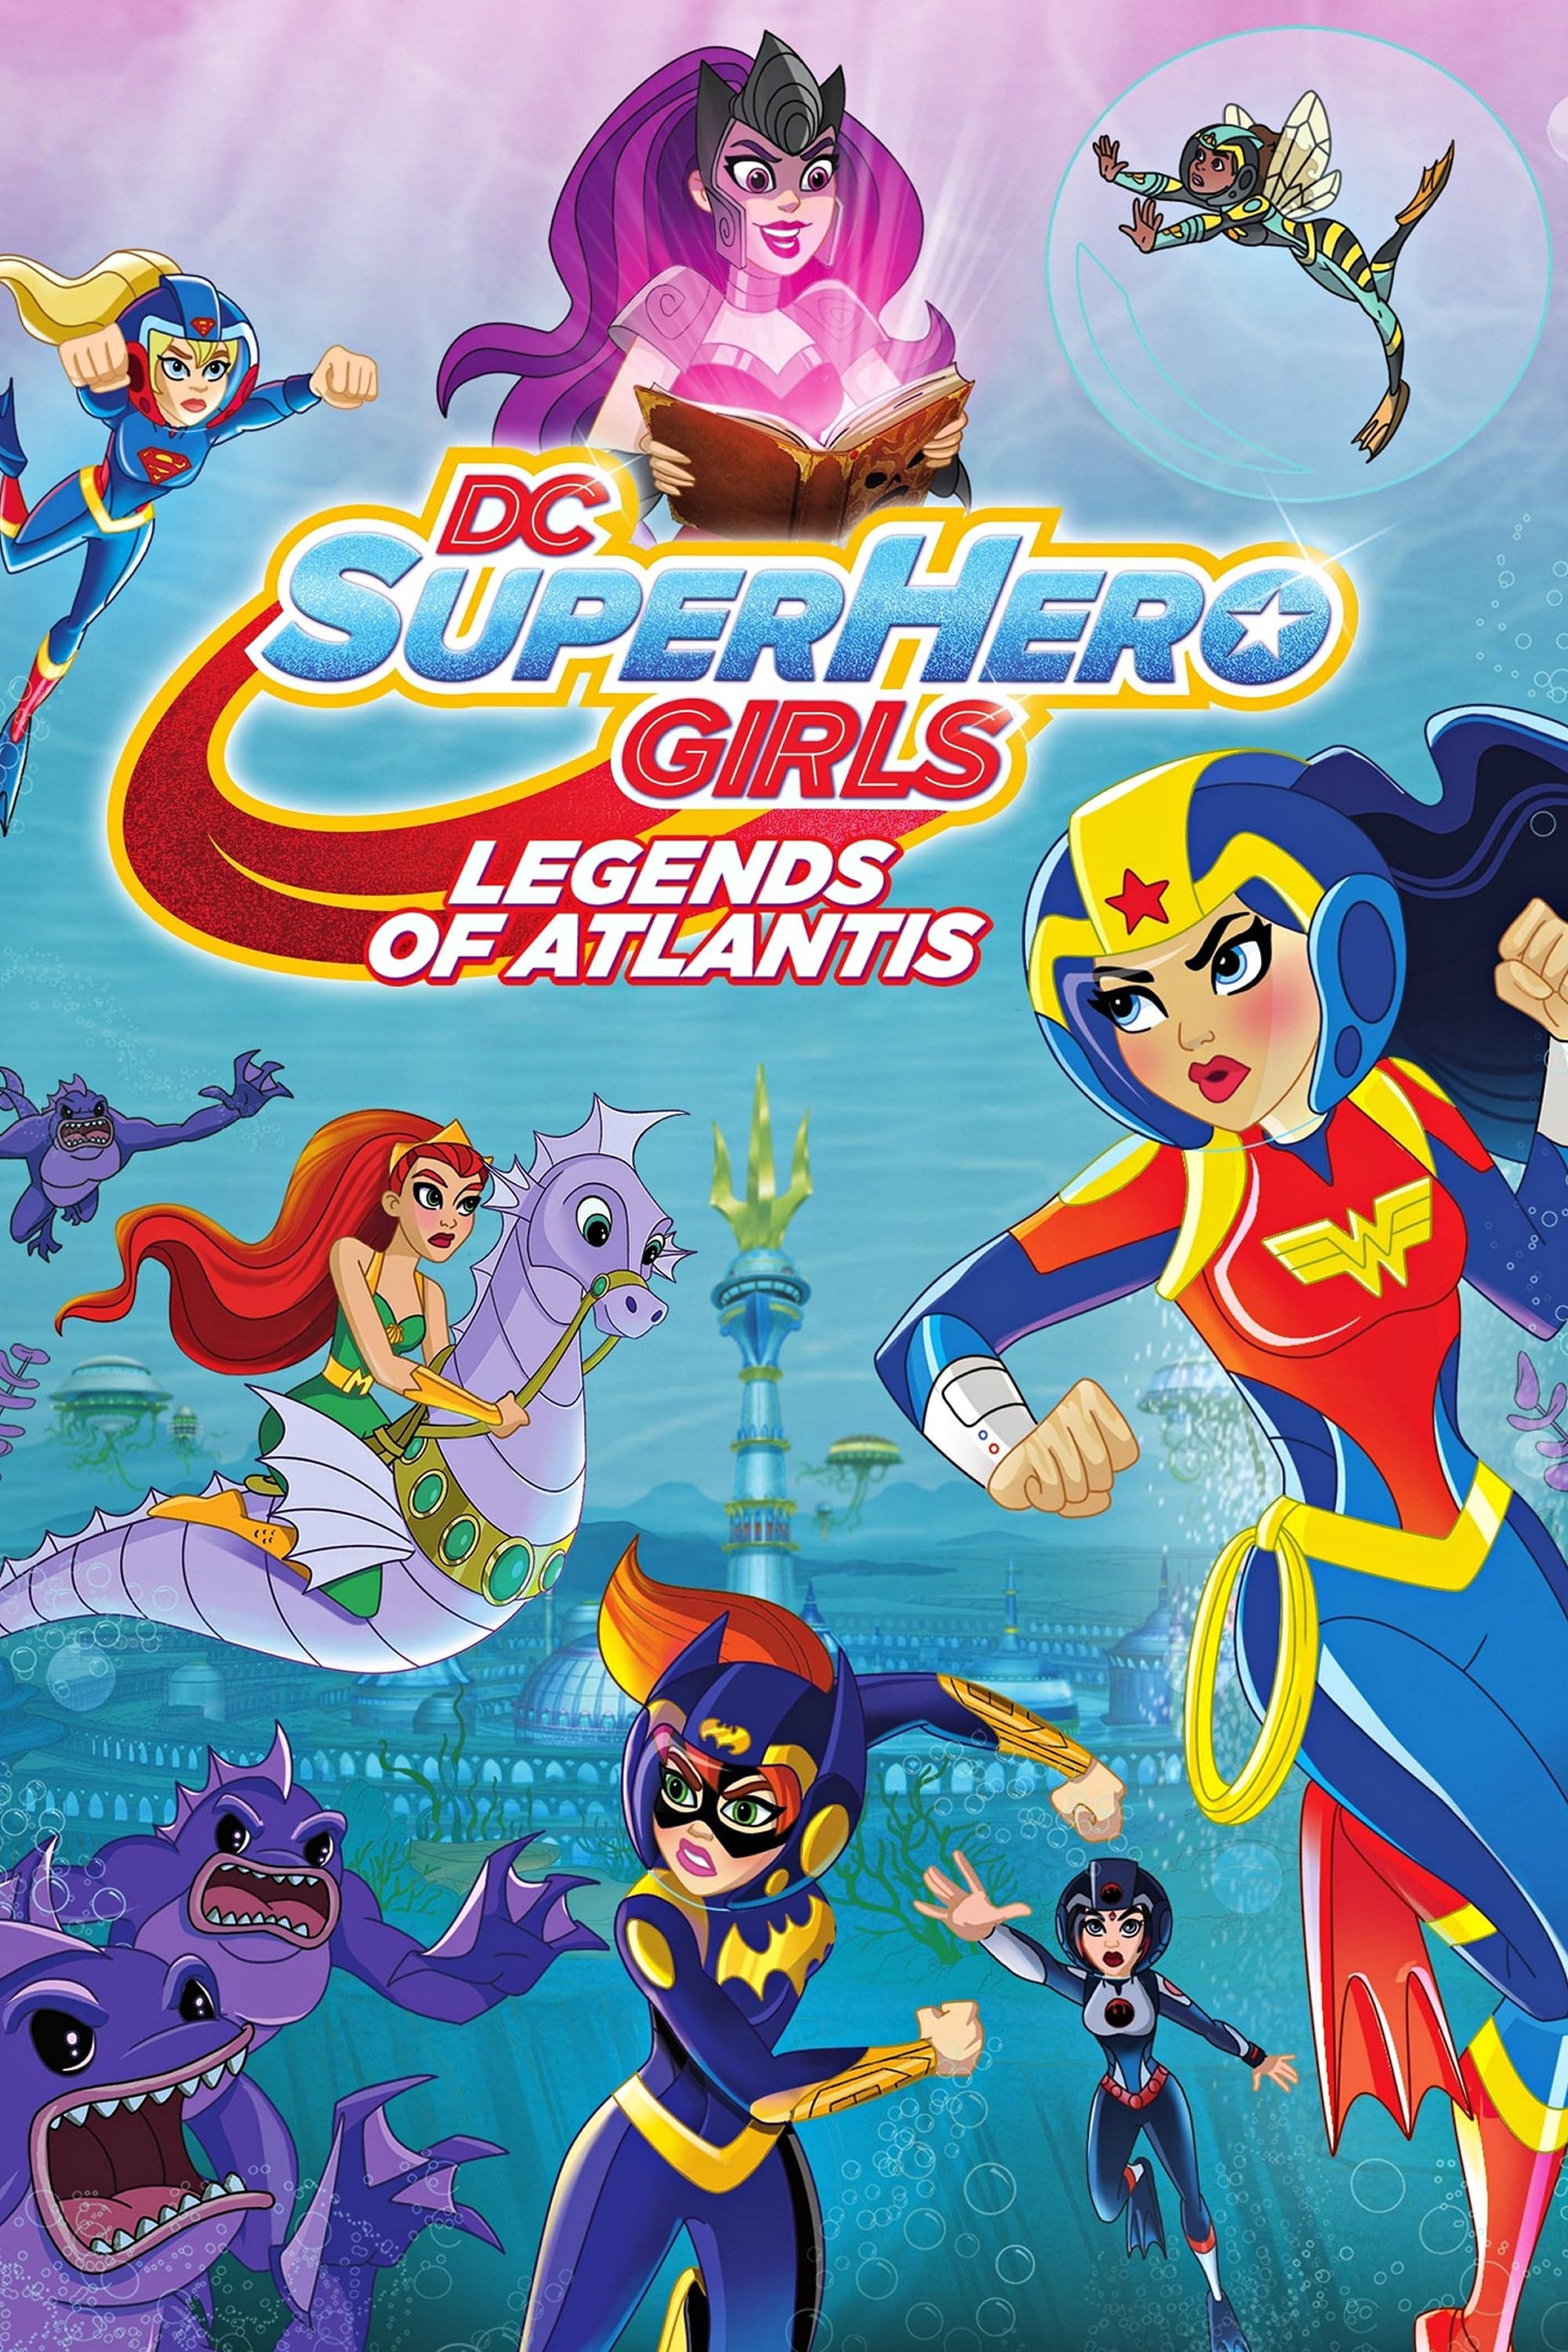 Plakat von "DC Super Hero Girls: Legends of Atlantis"